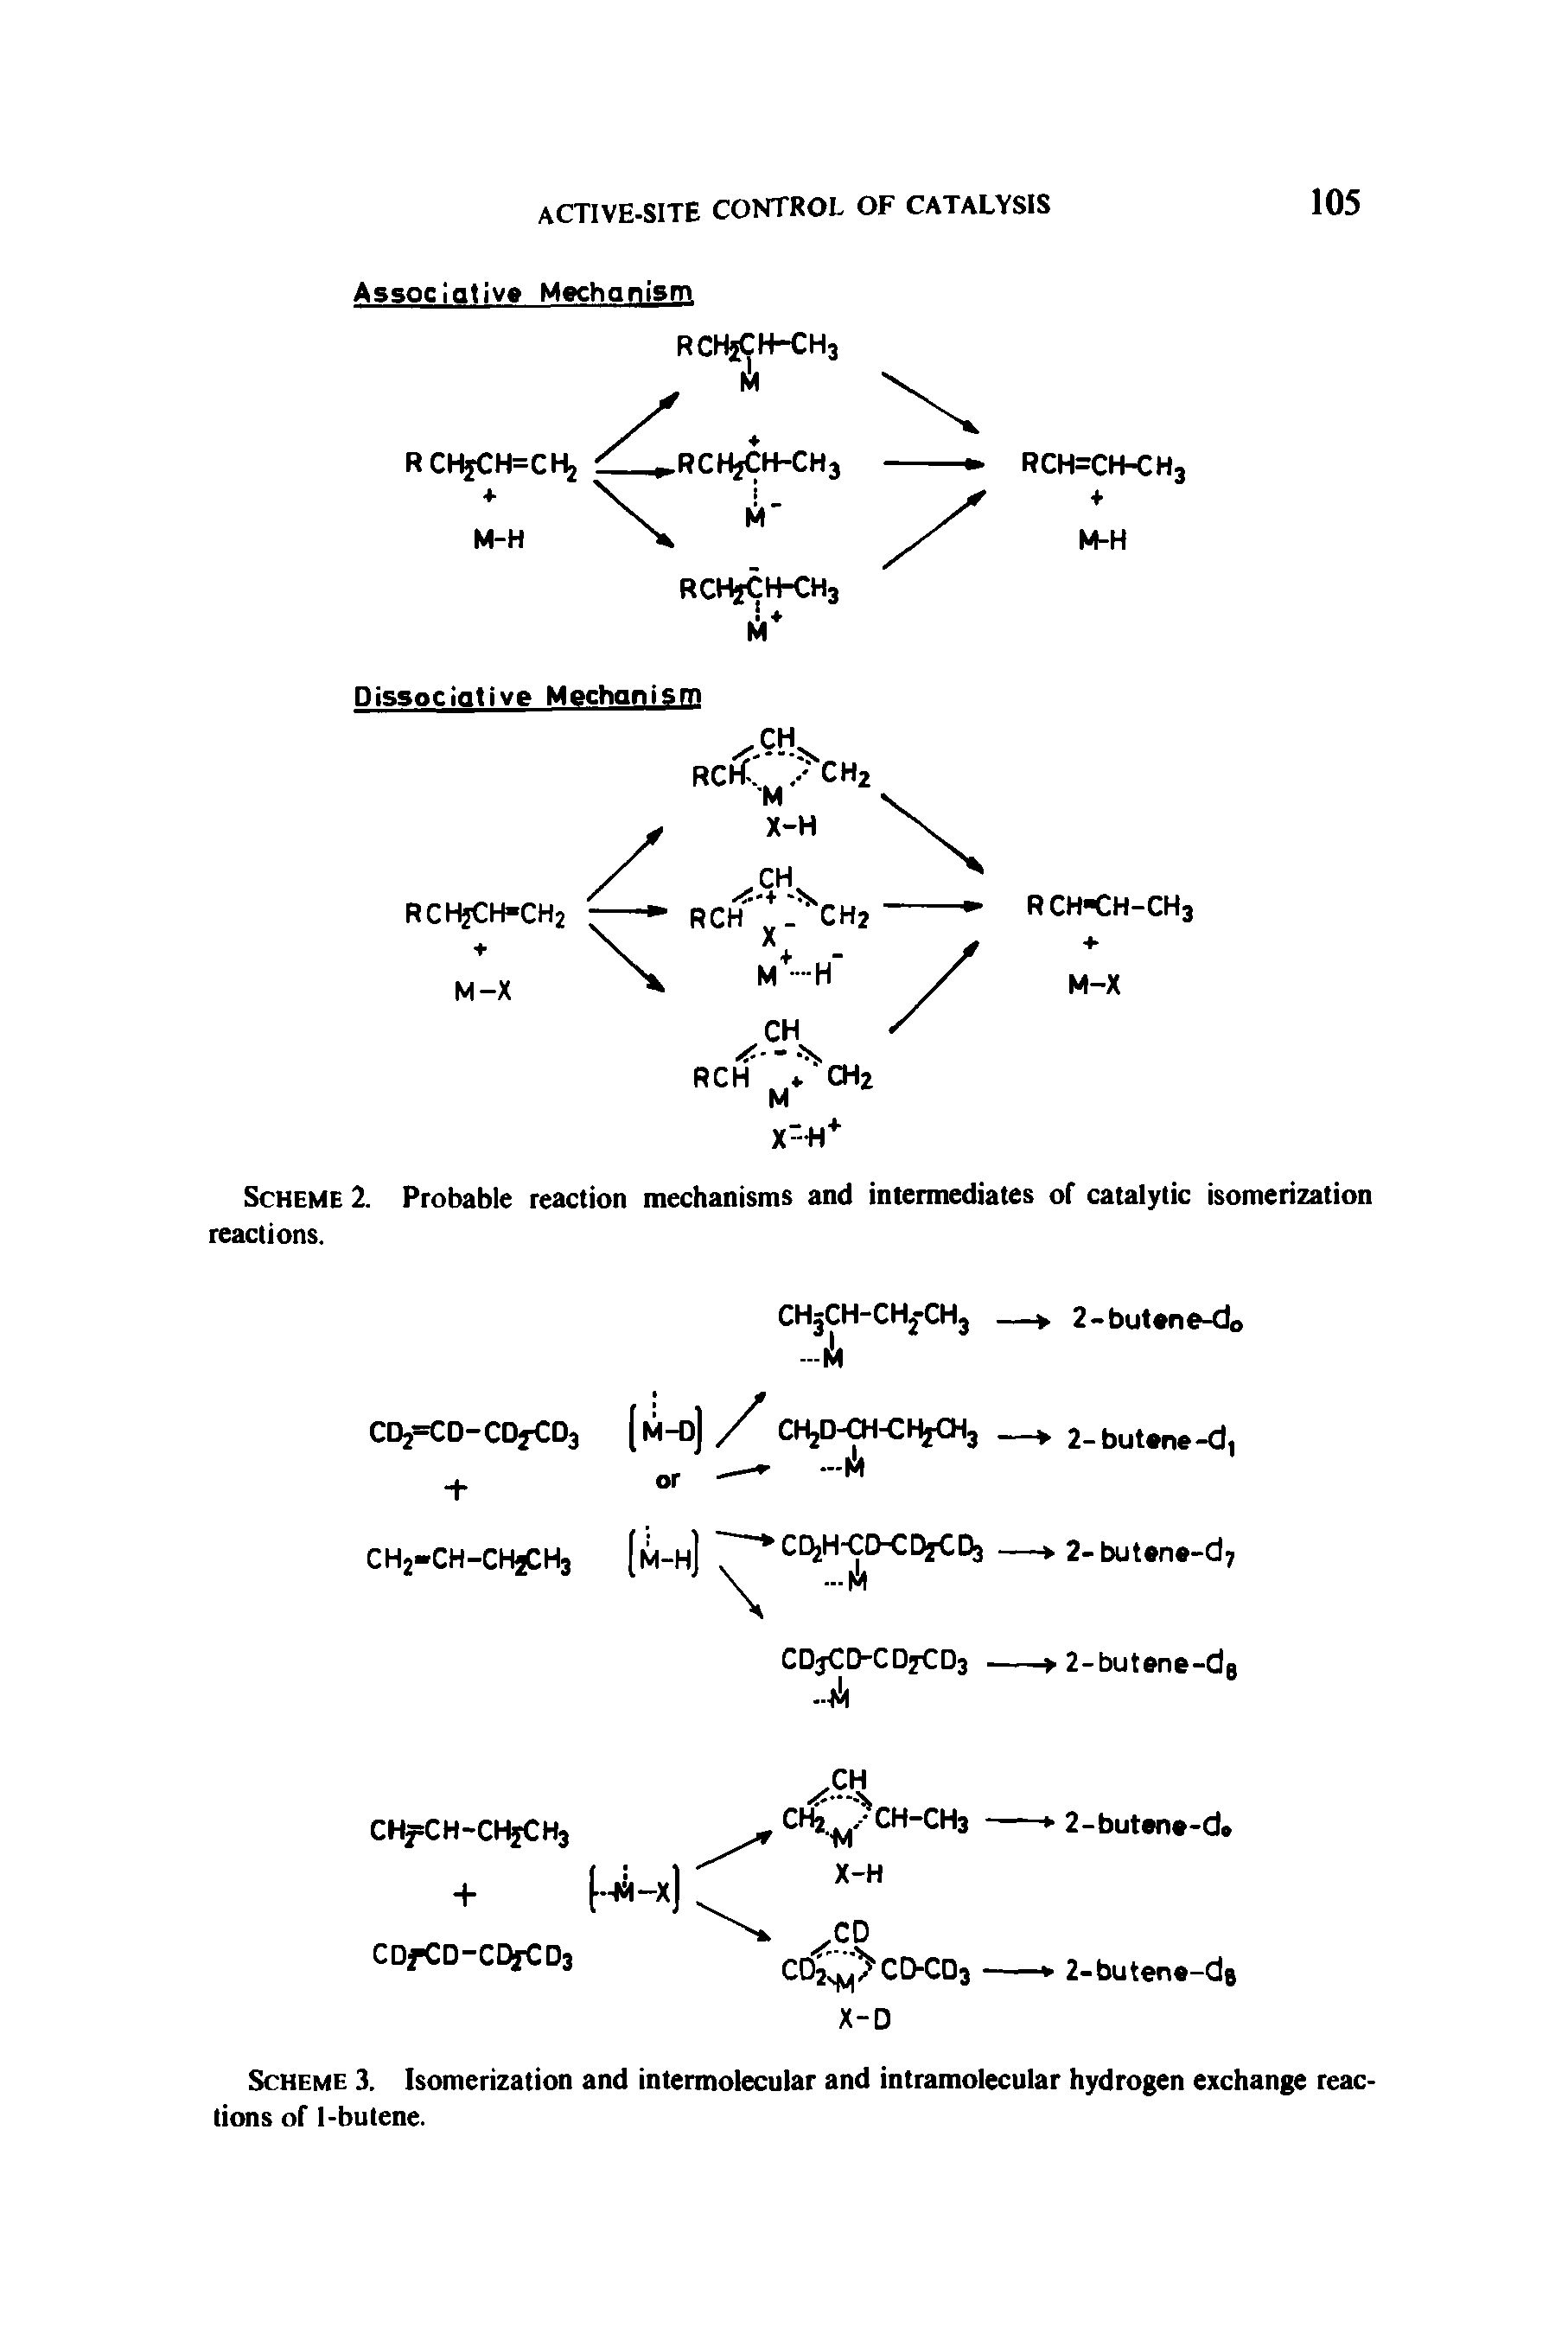 Scheme 3. Isomerization and intermolecular and intramolecular hydrogen exchange reactions of I-butene.